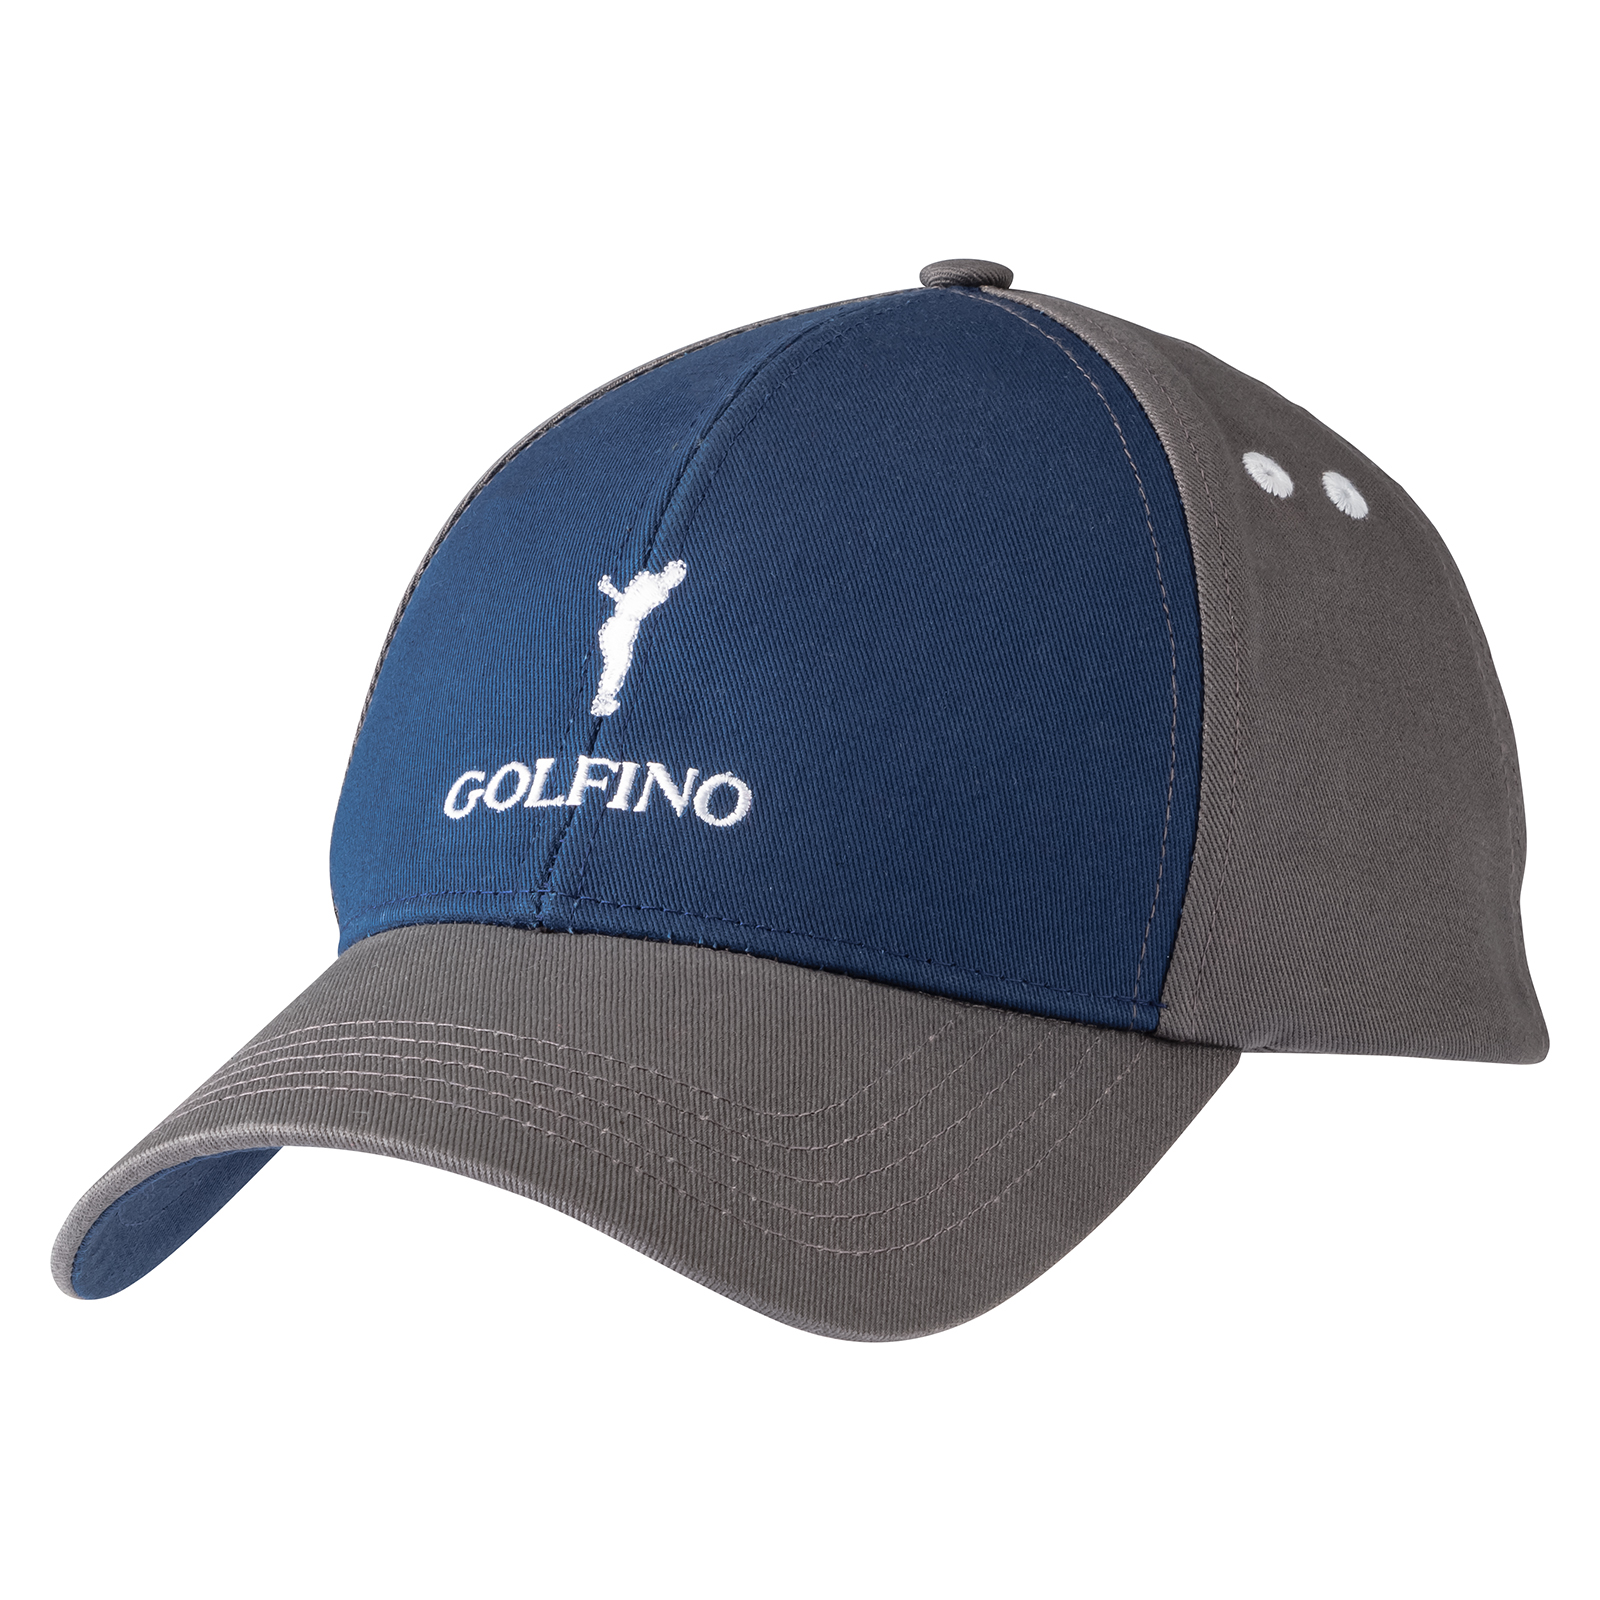 Men's golf cap with colour blocking elements